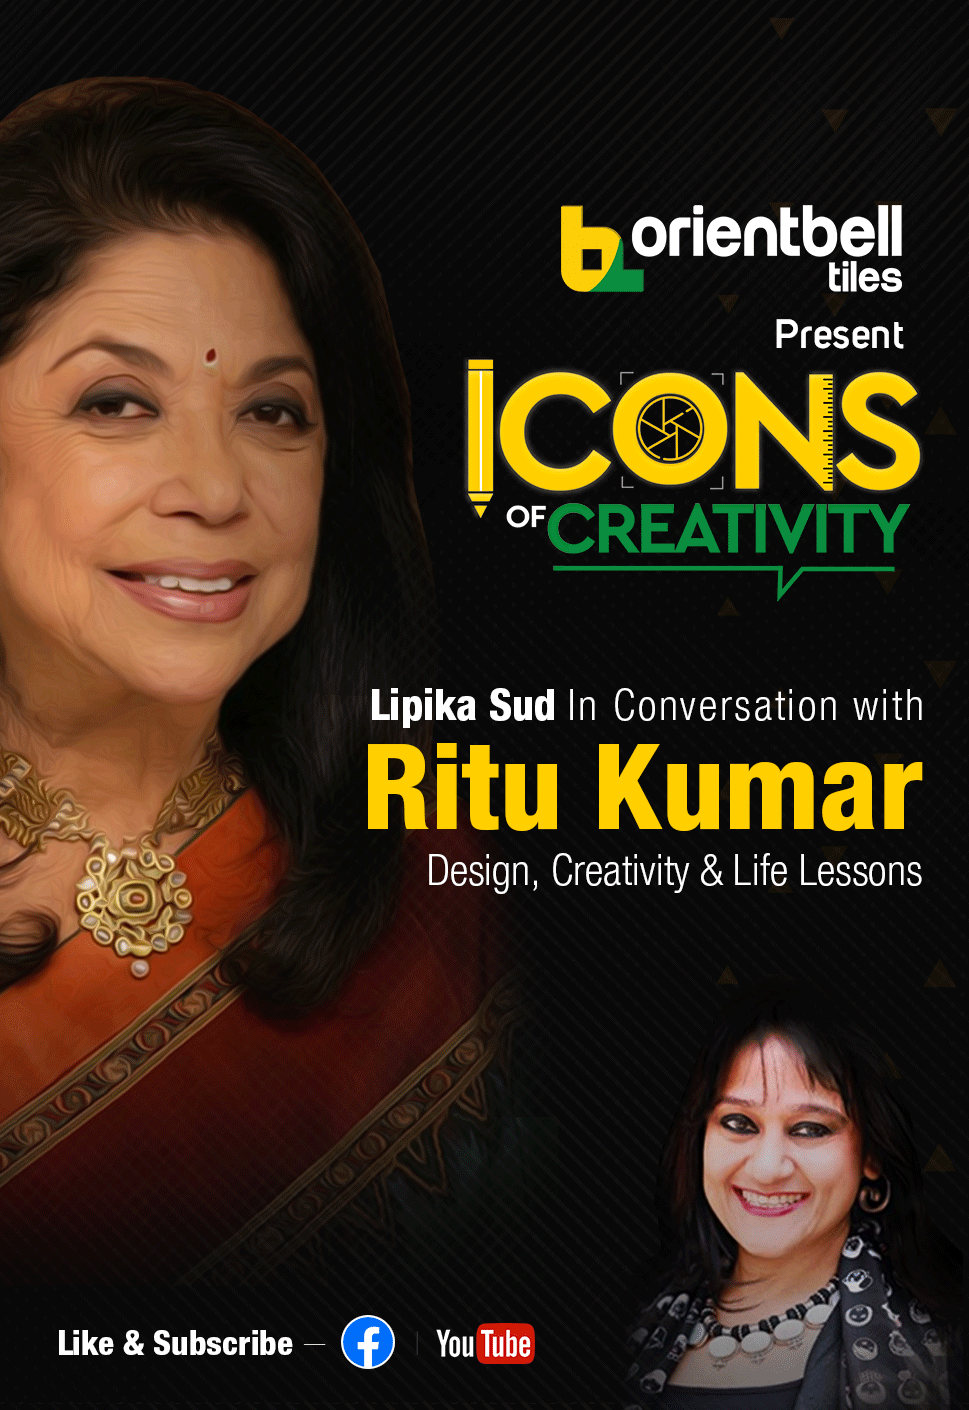 Creativity, Entrepreneurship, Life-Lessons, and more with Ritu Kumar